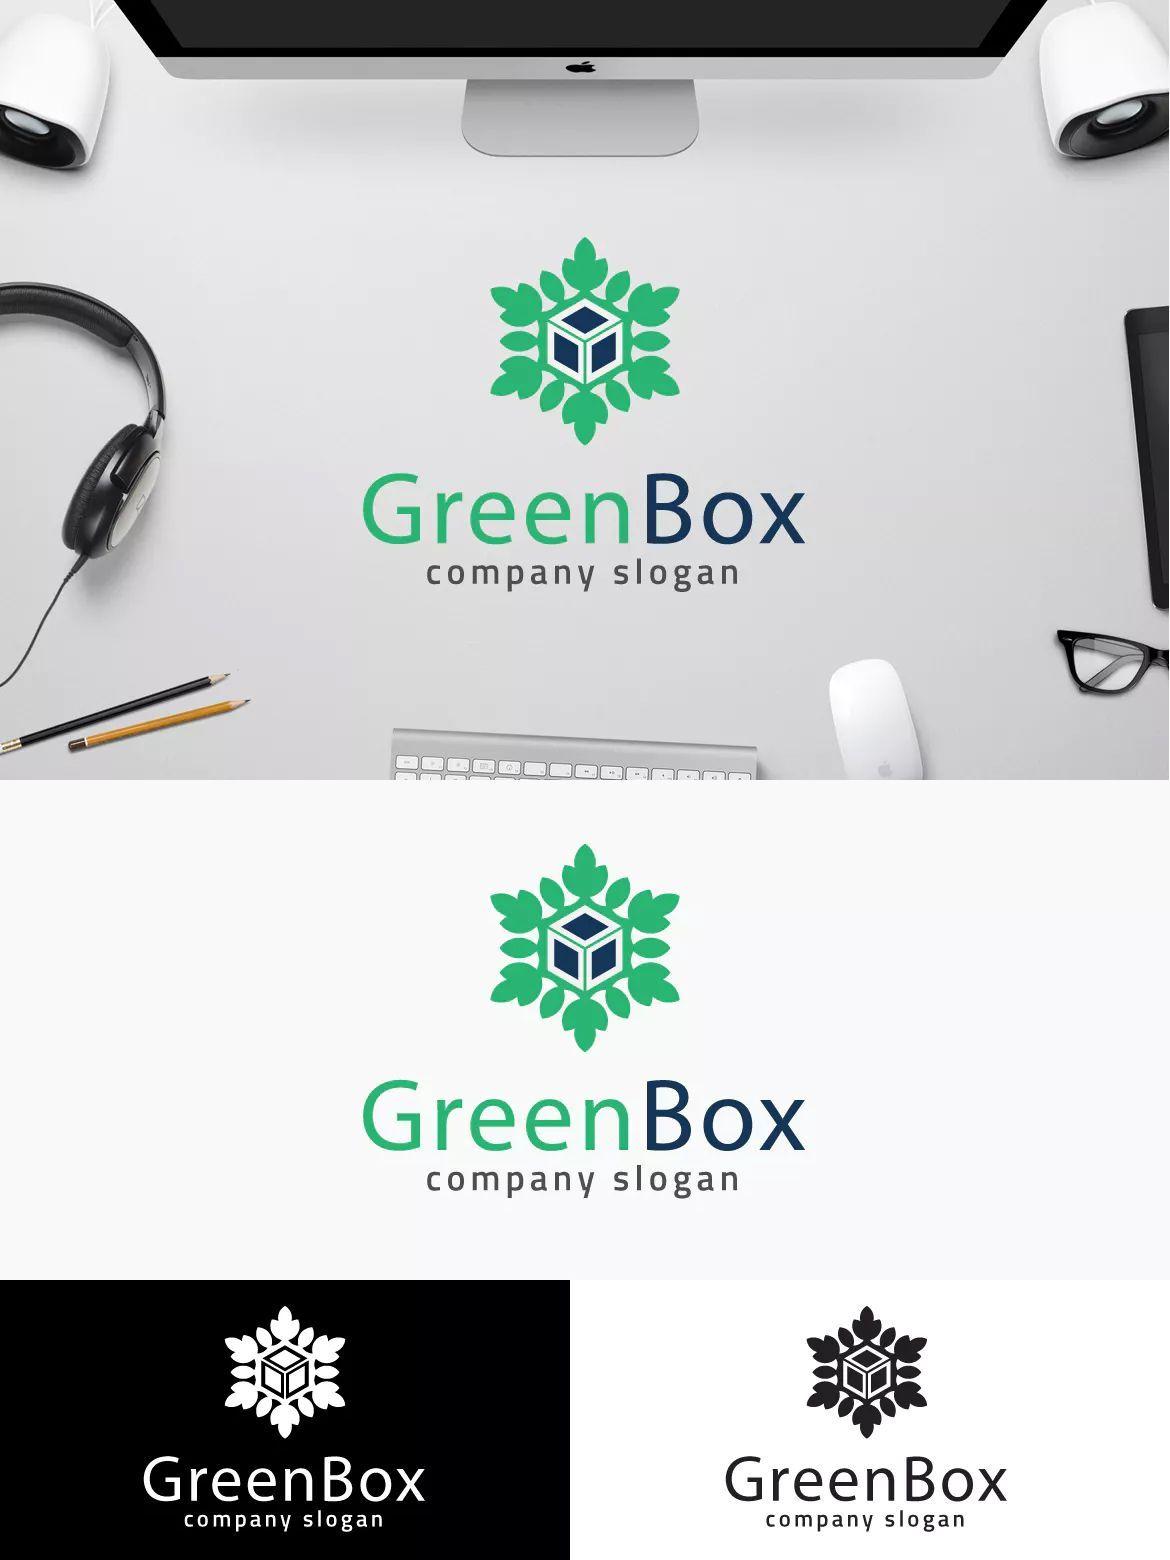 Company with Green Box Logo - Green Box Logo Template AI, EPS | Logo Templates | Pinterest | Logo ...